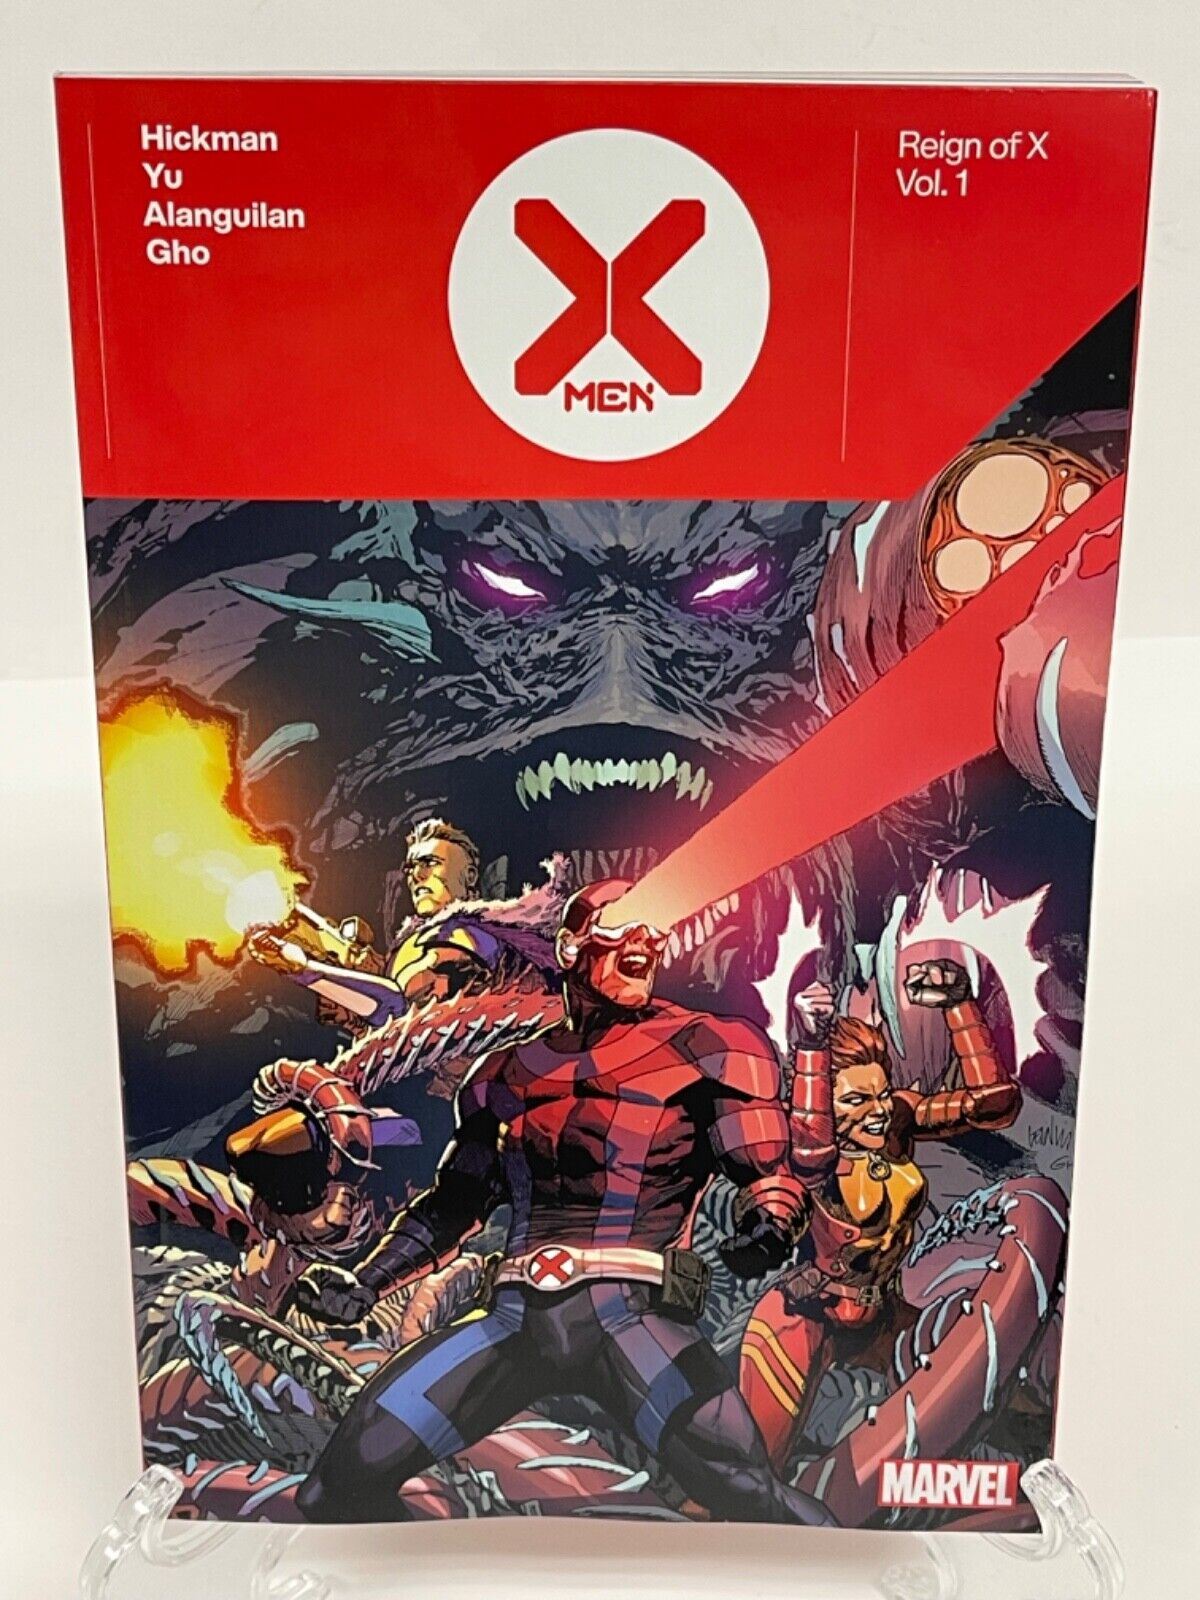 X-Men Reign of X by Jonathan Hickman Vol 1 Marvel Comics TPB Trade Paperback